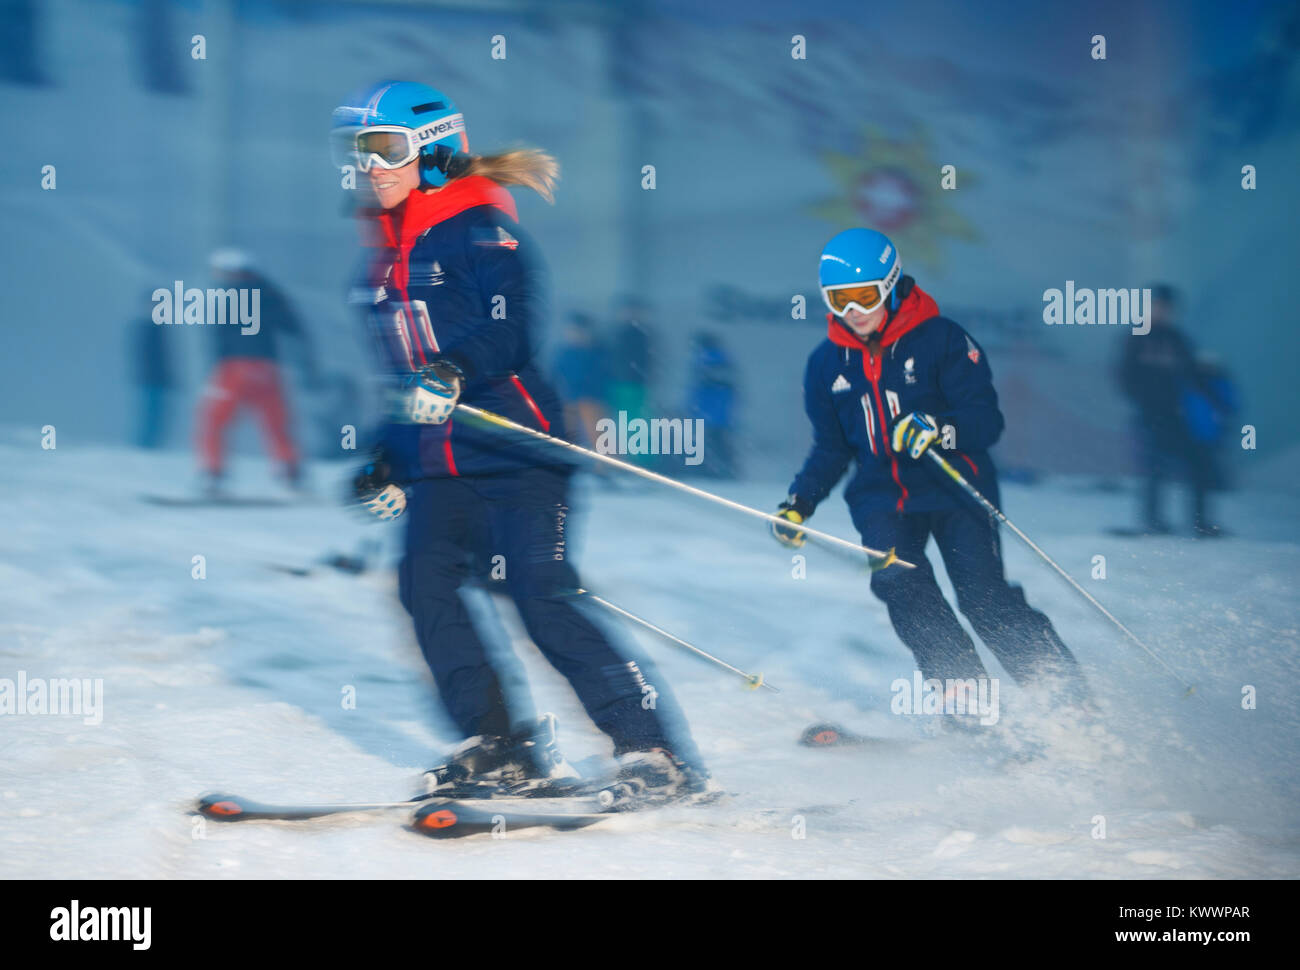 ParalympicsGB Skifahrer Jennifer Kehoe (rechts) und Menna Fitzpatrick während des ParalympicsGB 2018 Winter Olympics Alpin und Snowboard Team Ankündigung, Am Snowcenter, Hemel Hempstead. Stockfoto